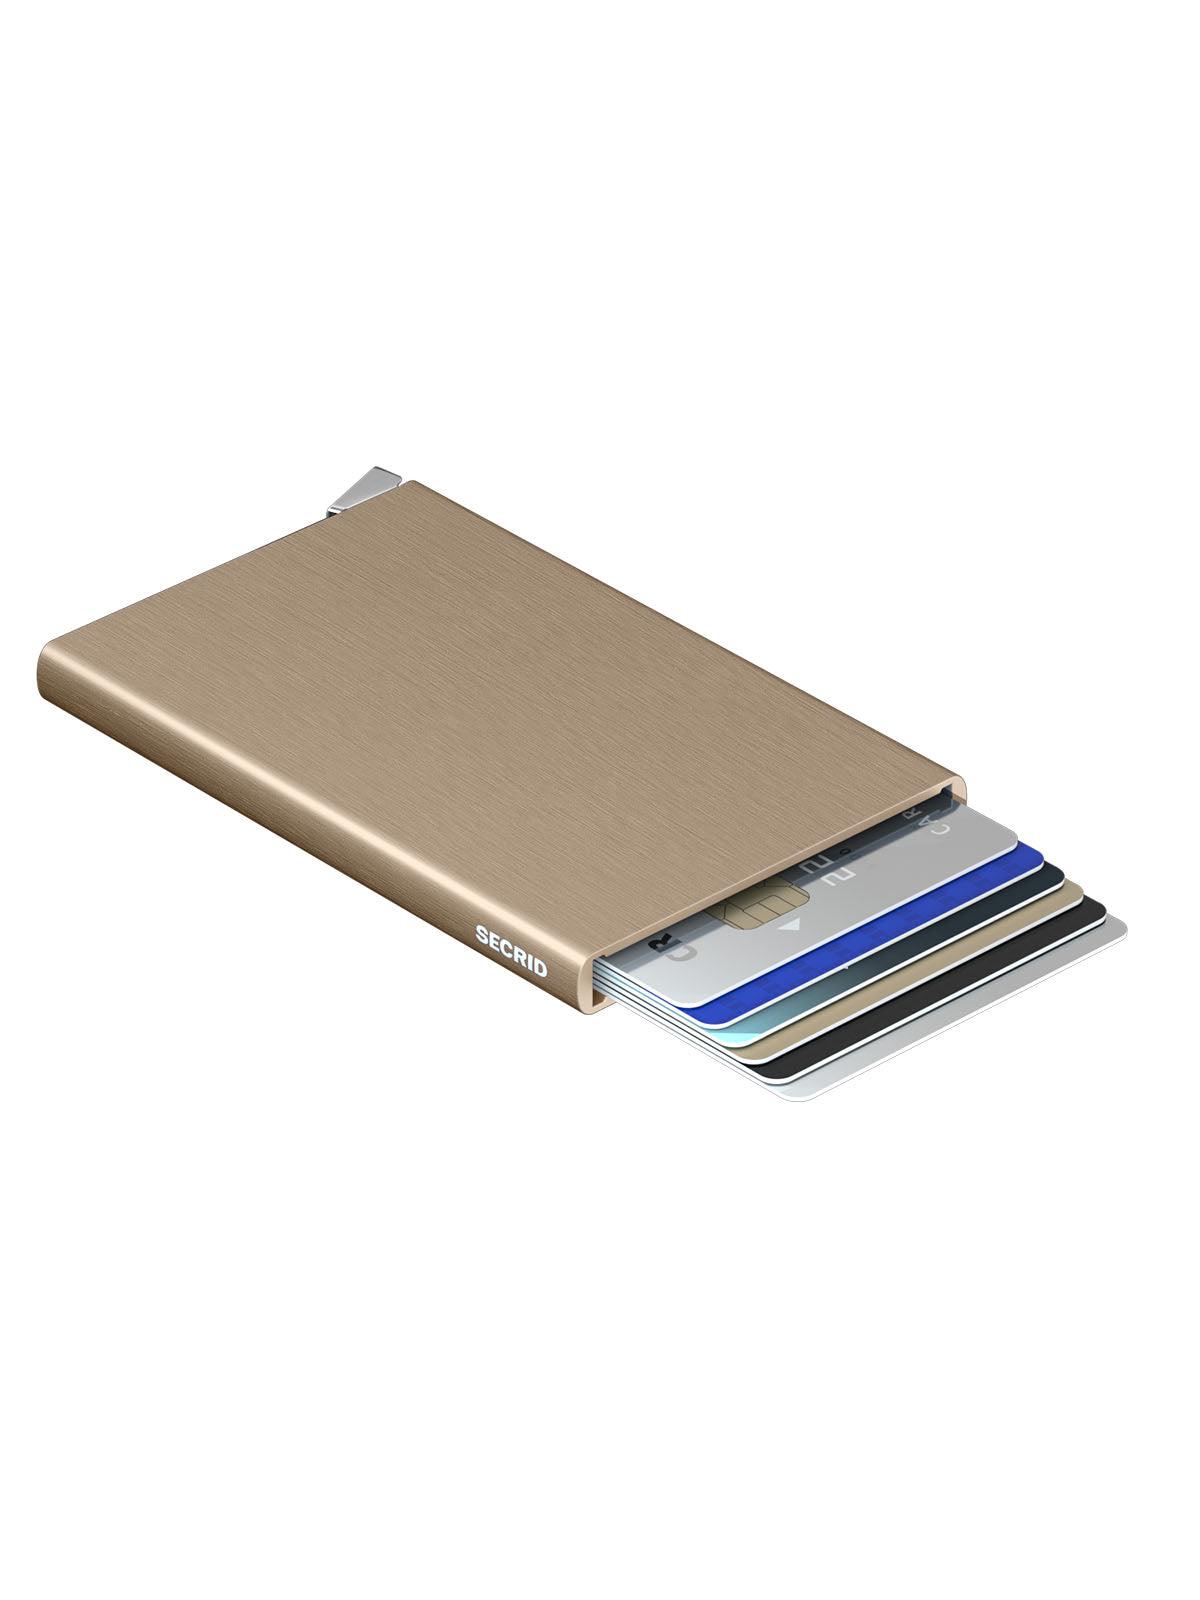 Secrid Premium Edition Cardprotector Frost Sand